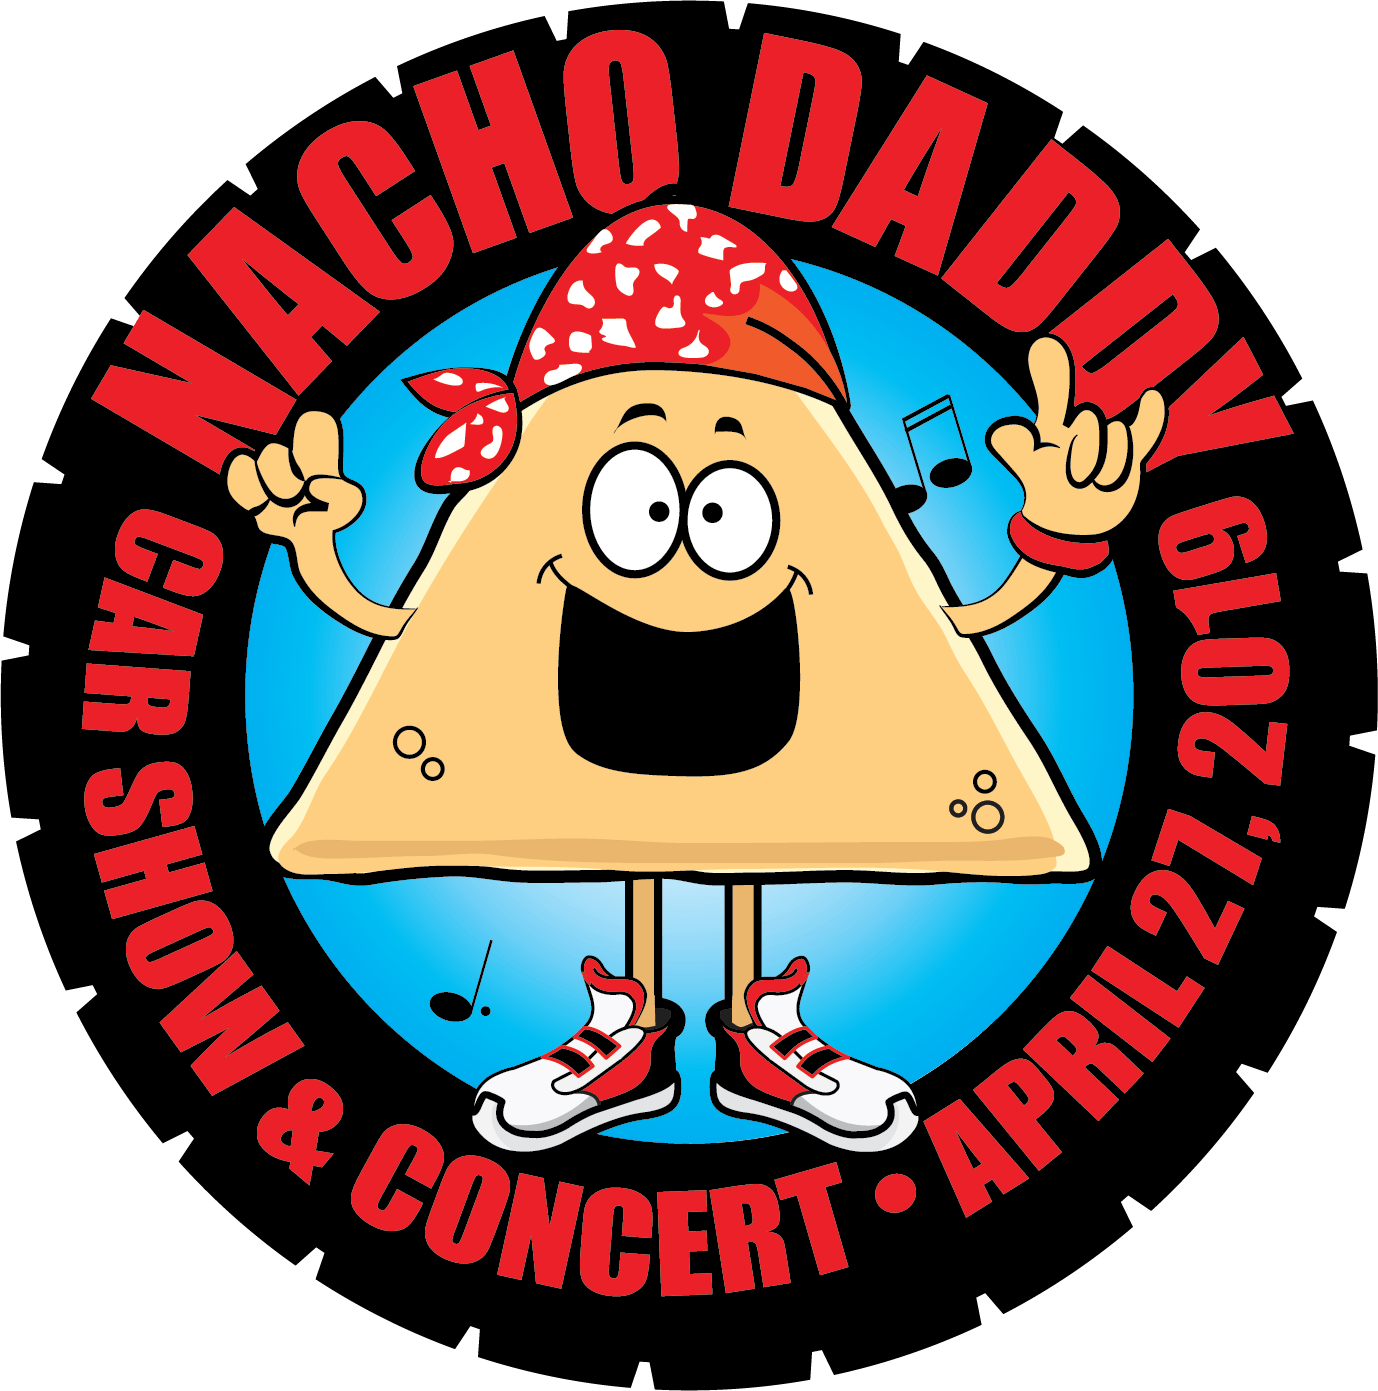 Nacho Daddy Car Show & Concert - Nacho Daddy Car Show & Concert (1378x1391)